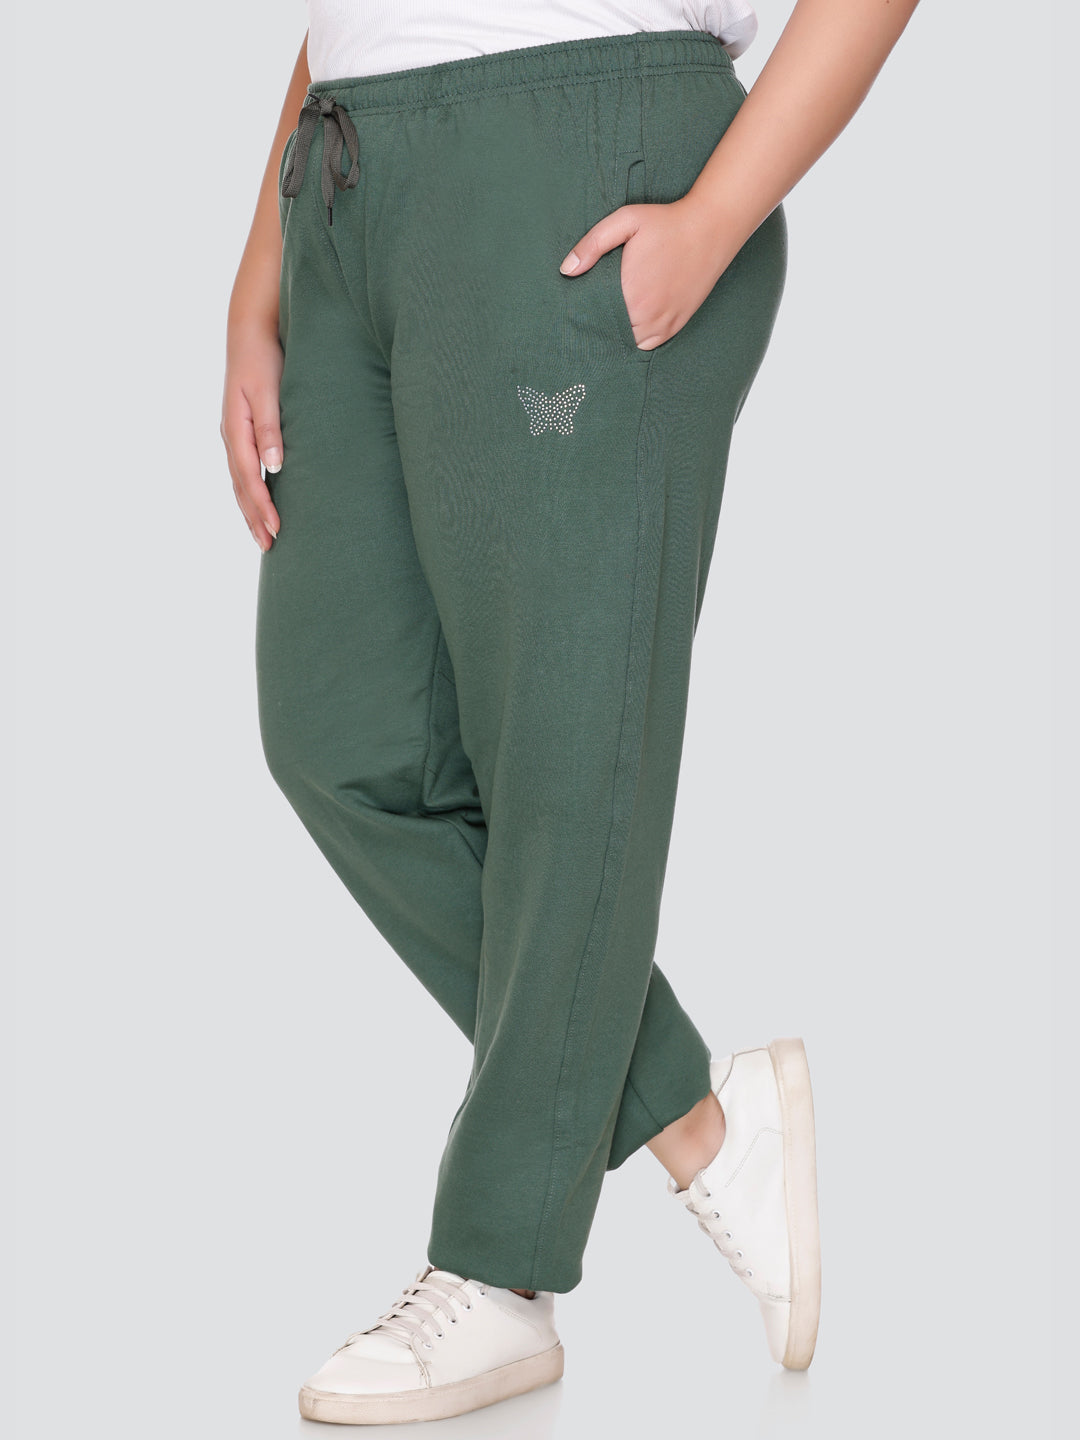 Plus Size Winters Cozy Fleece Track Pants For Women - Olive Green